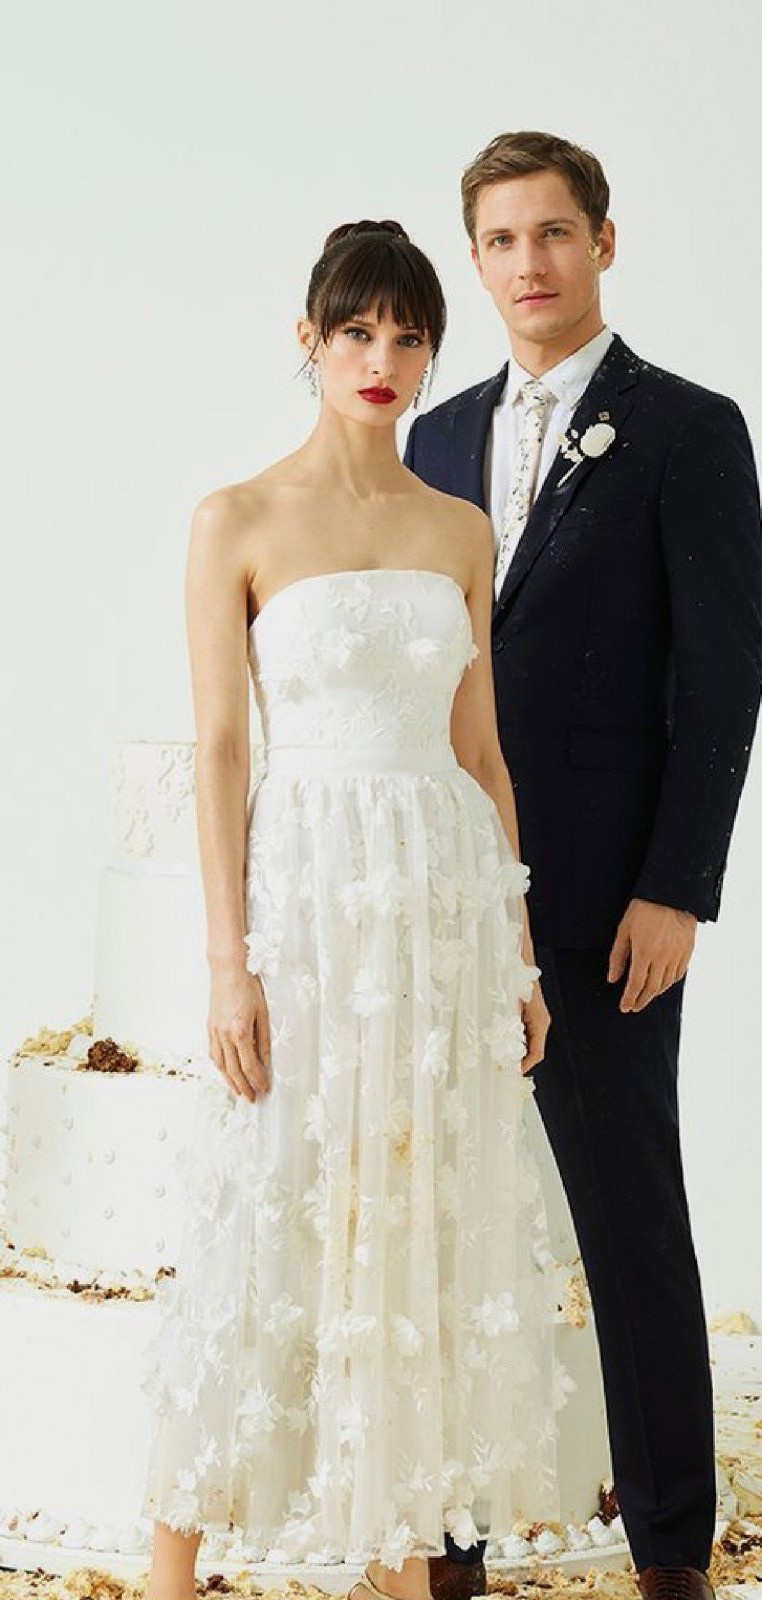 ted baker wedding dress sale, OFF 77%,Buy!